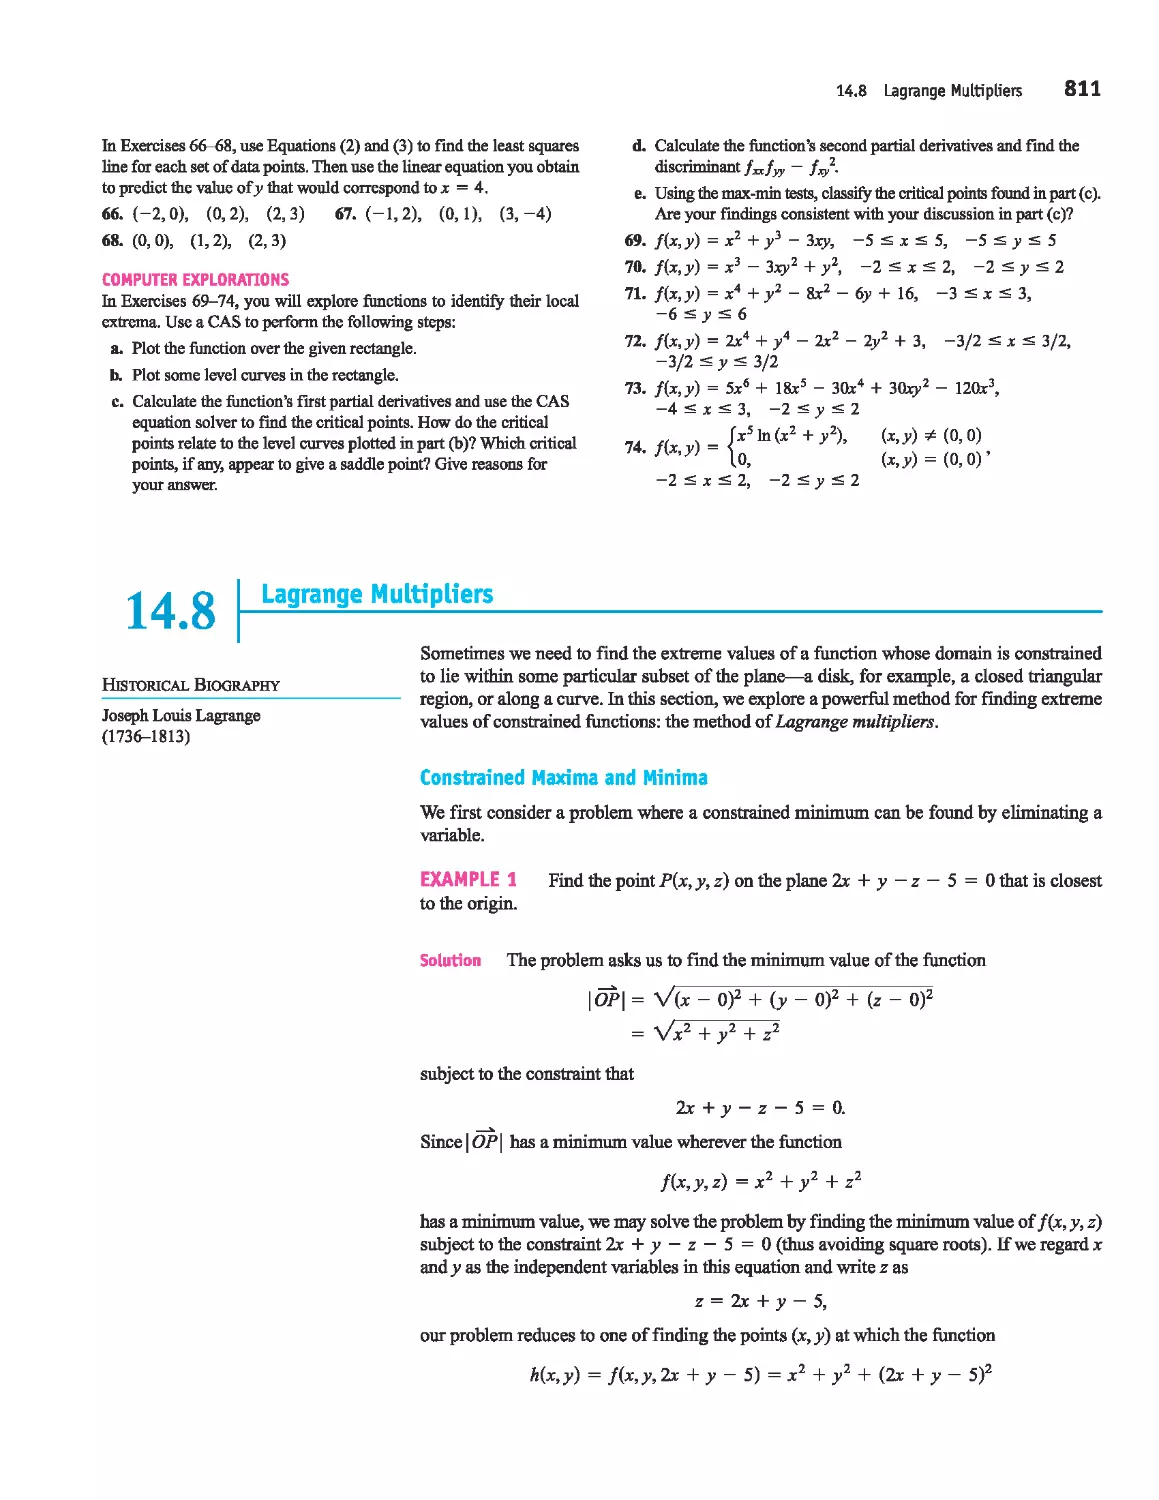 14.8 - Lagrange Multipliers